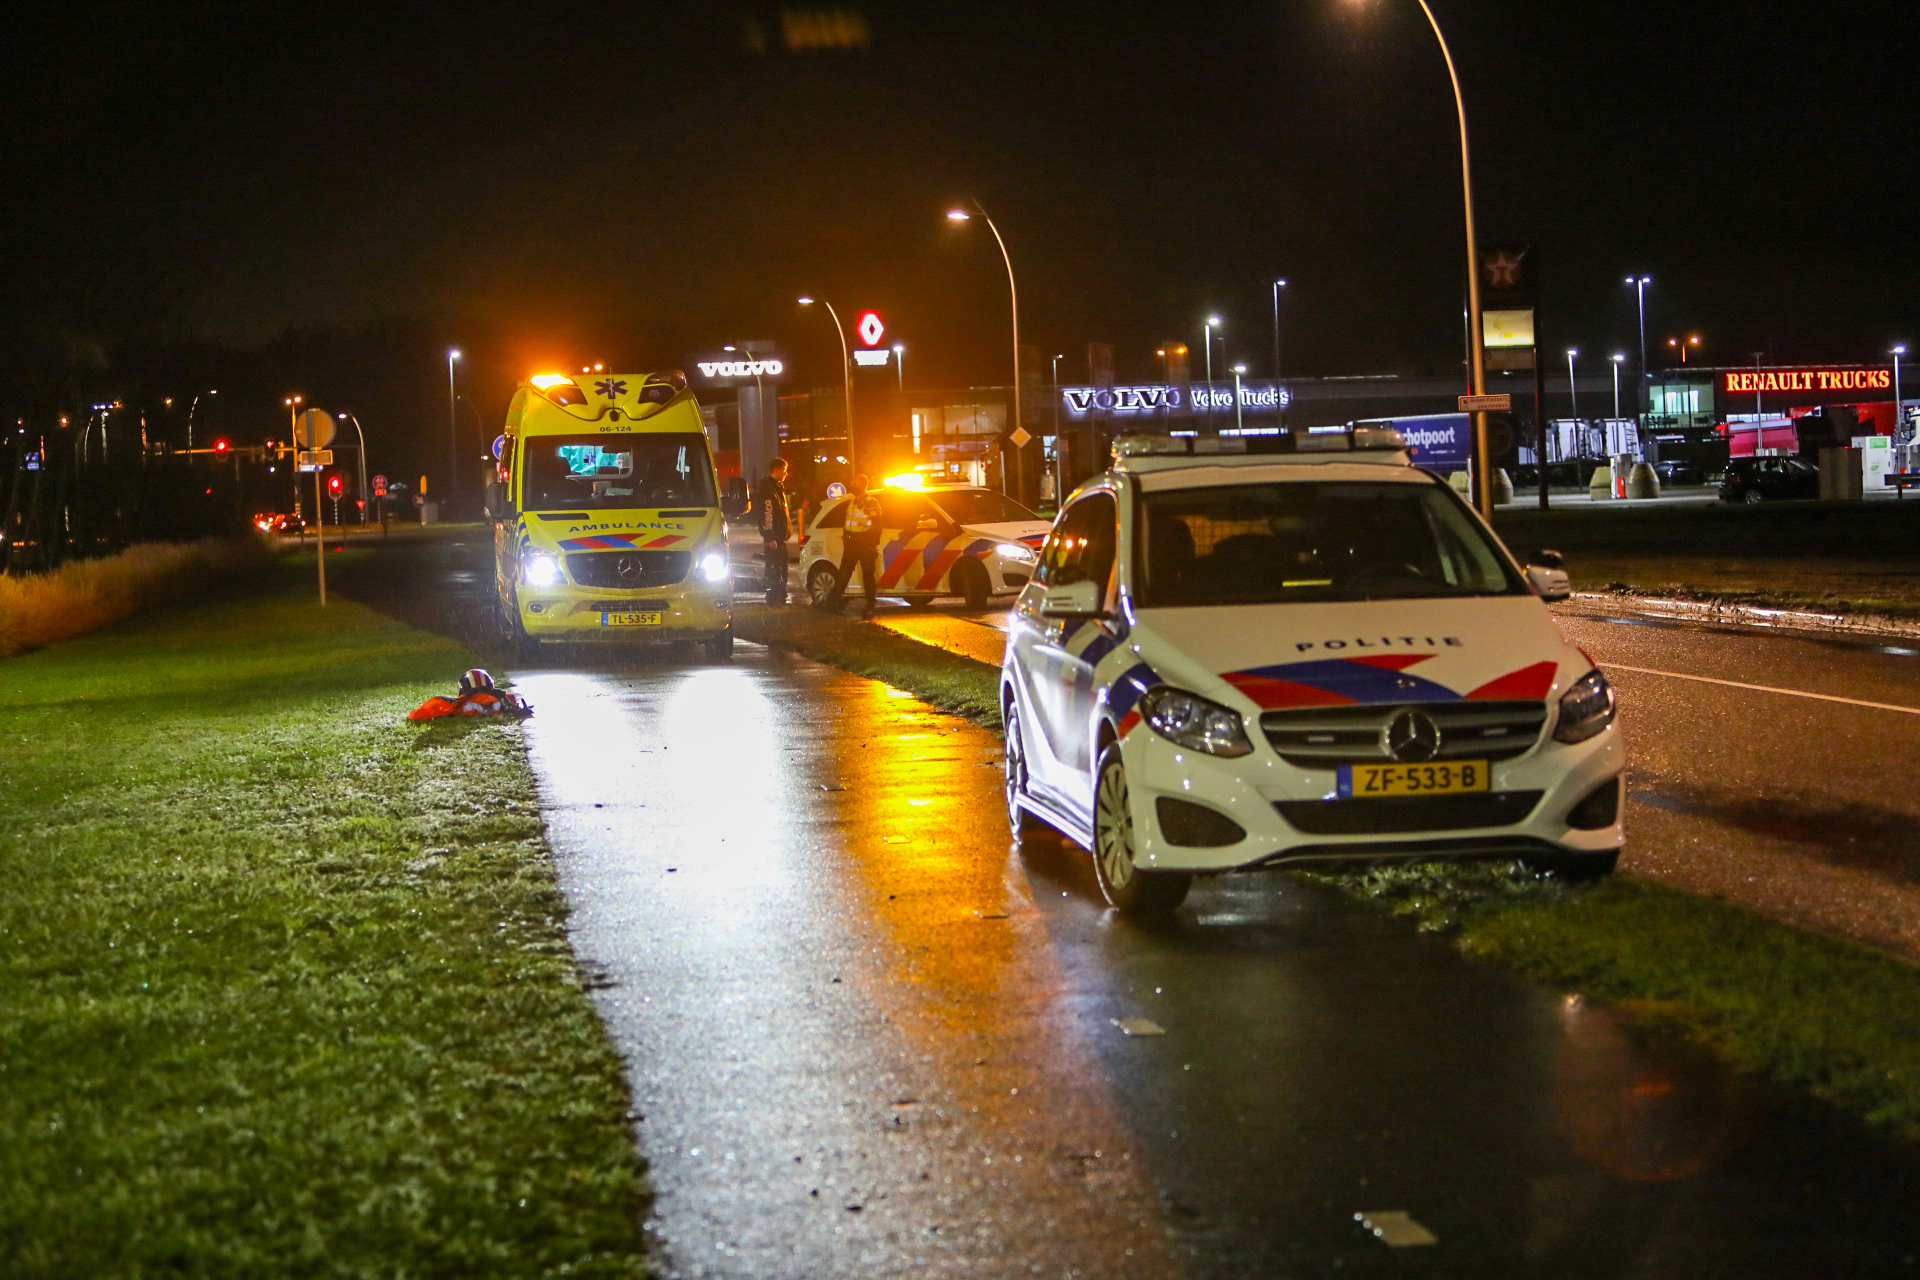 Voetganger gewond na botsing met scooter in Apeldoorn.